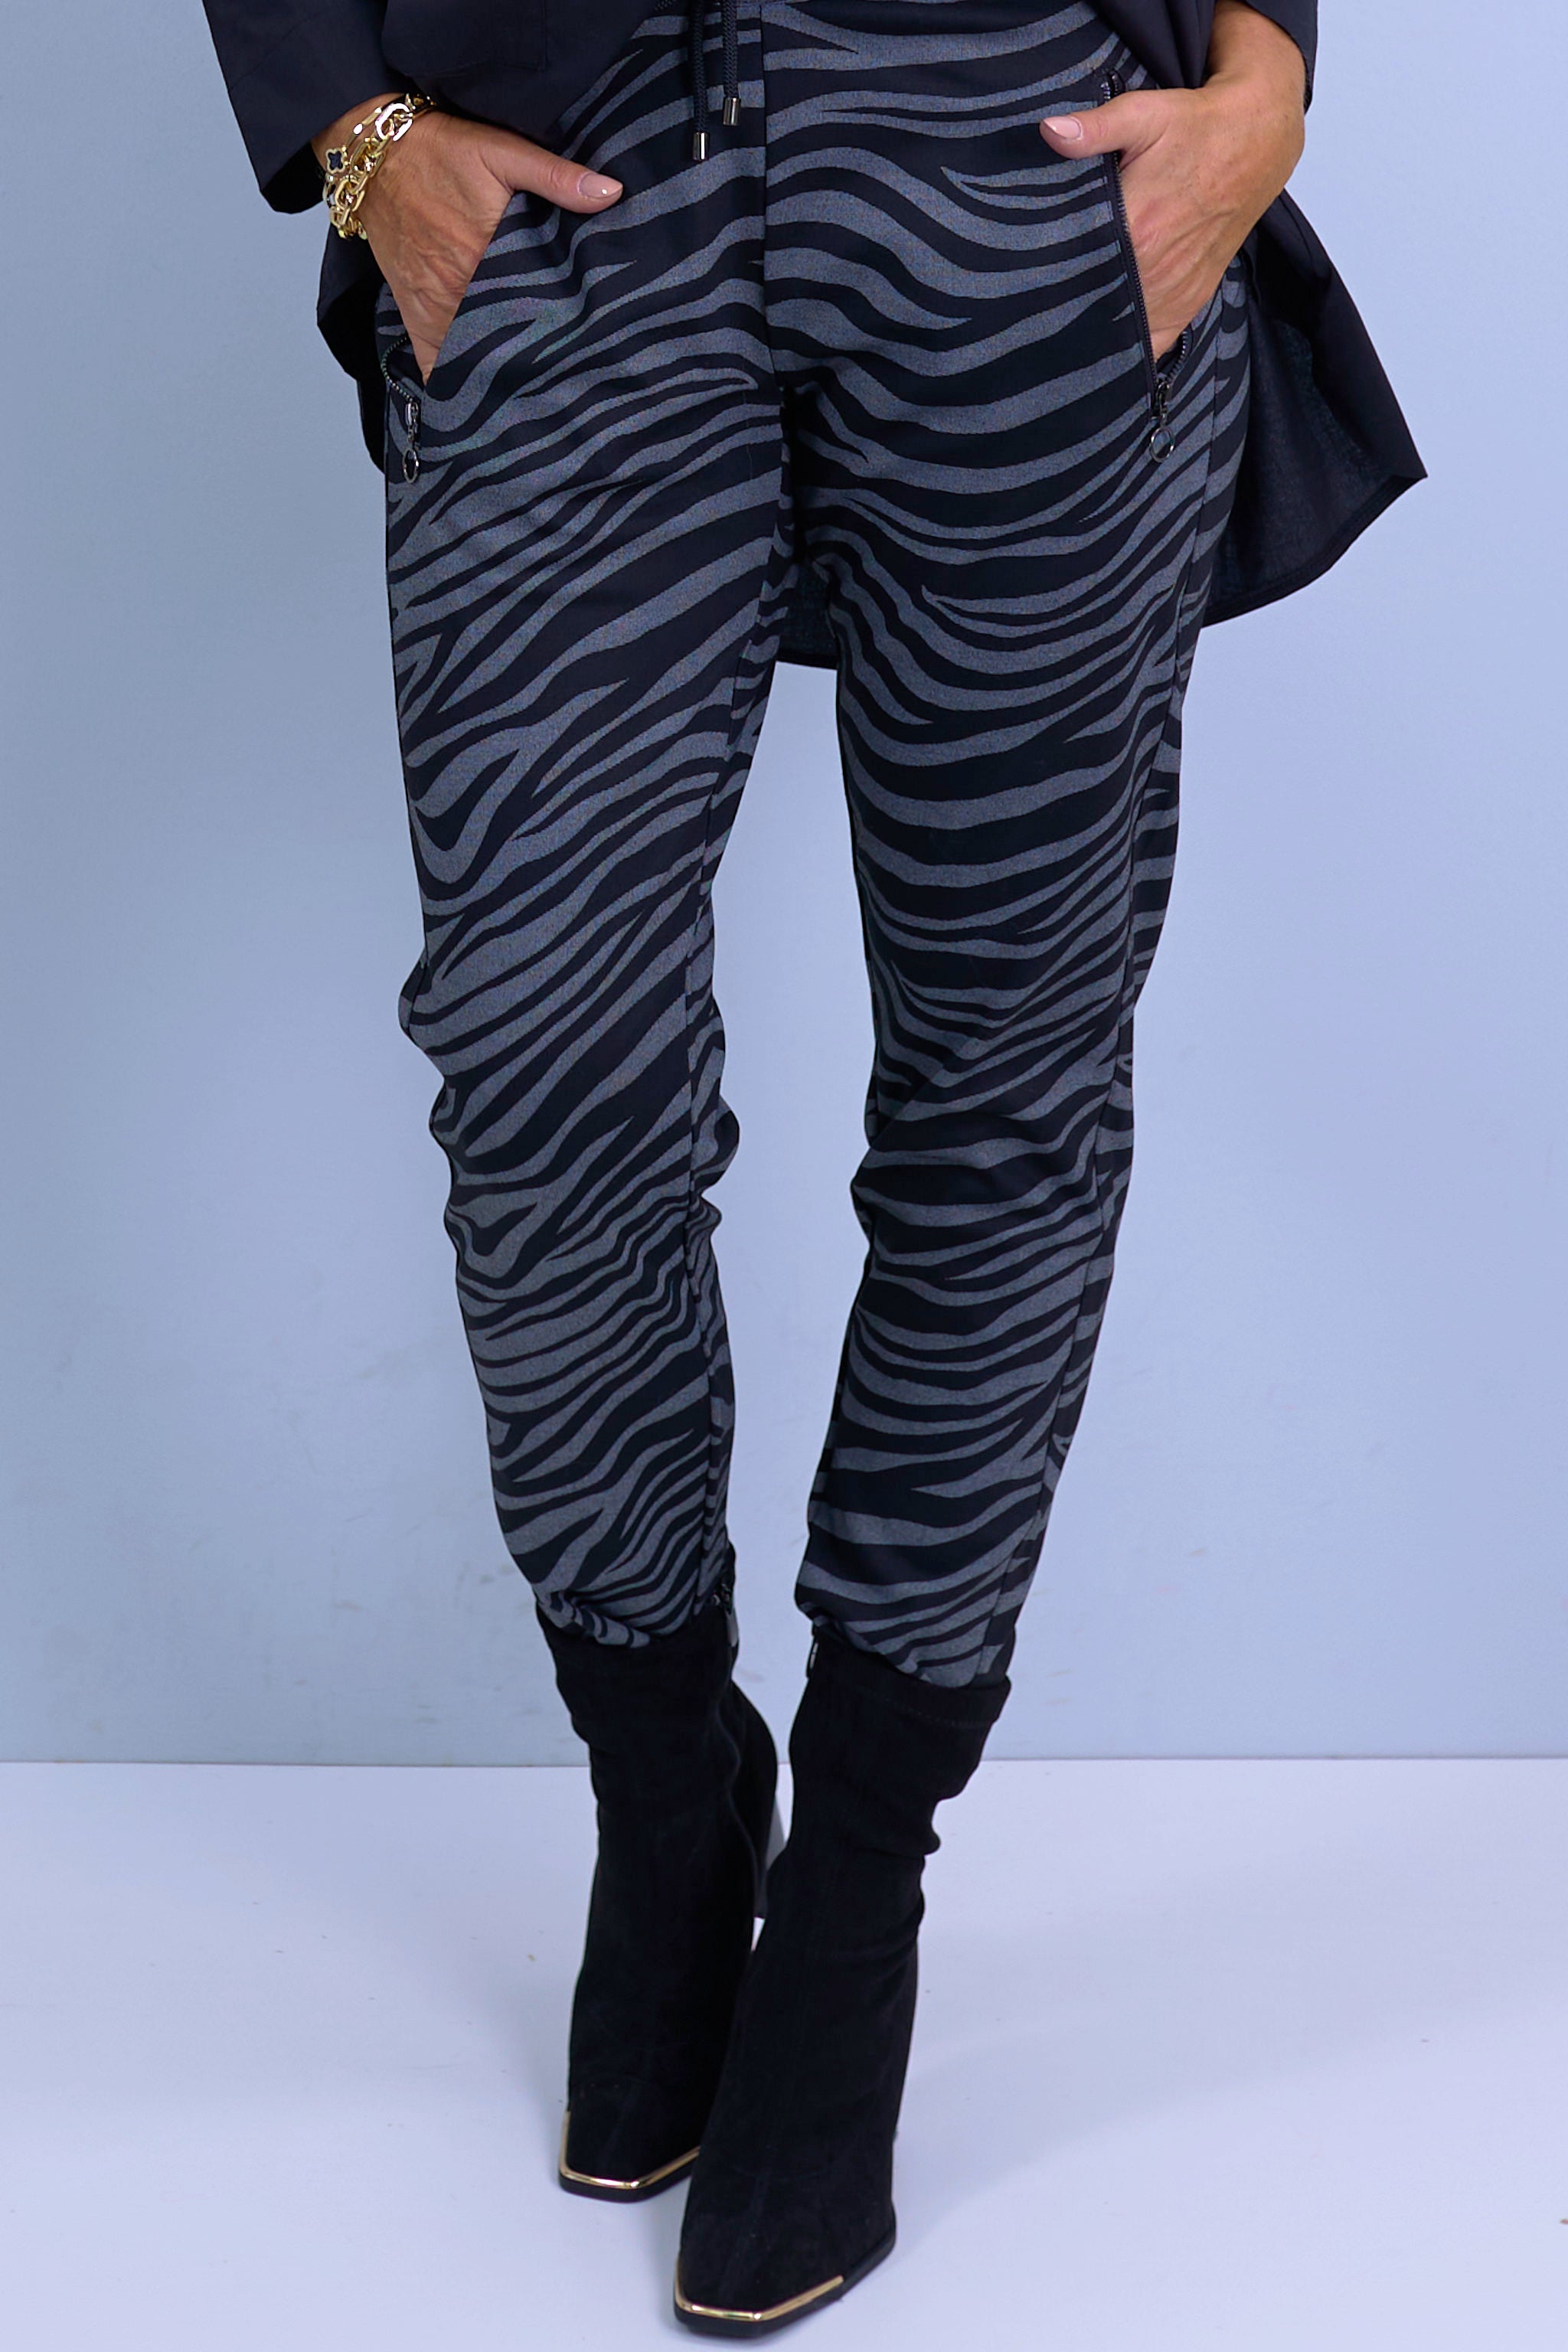 Zebra-Hose, schwarz-grau